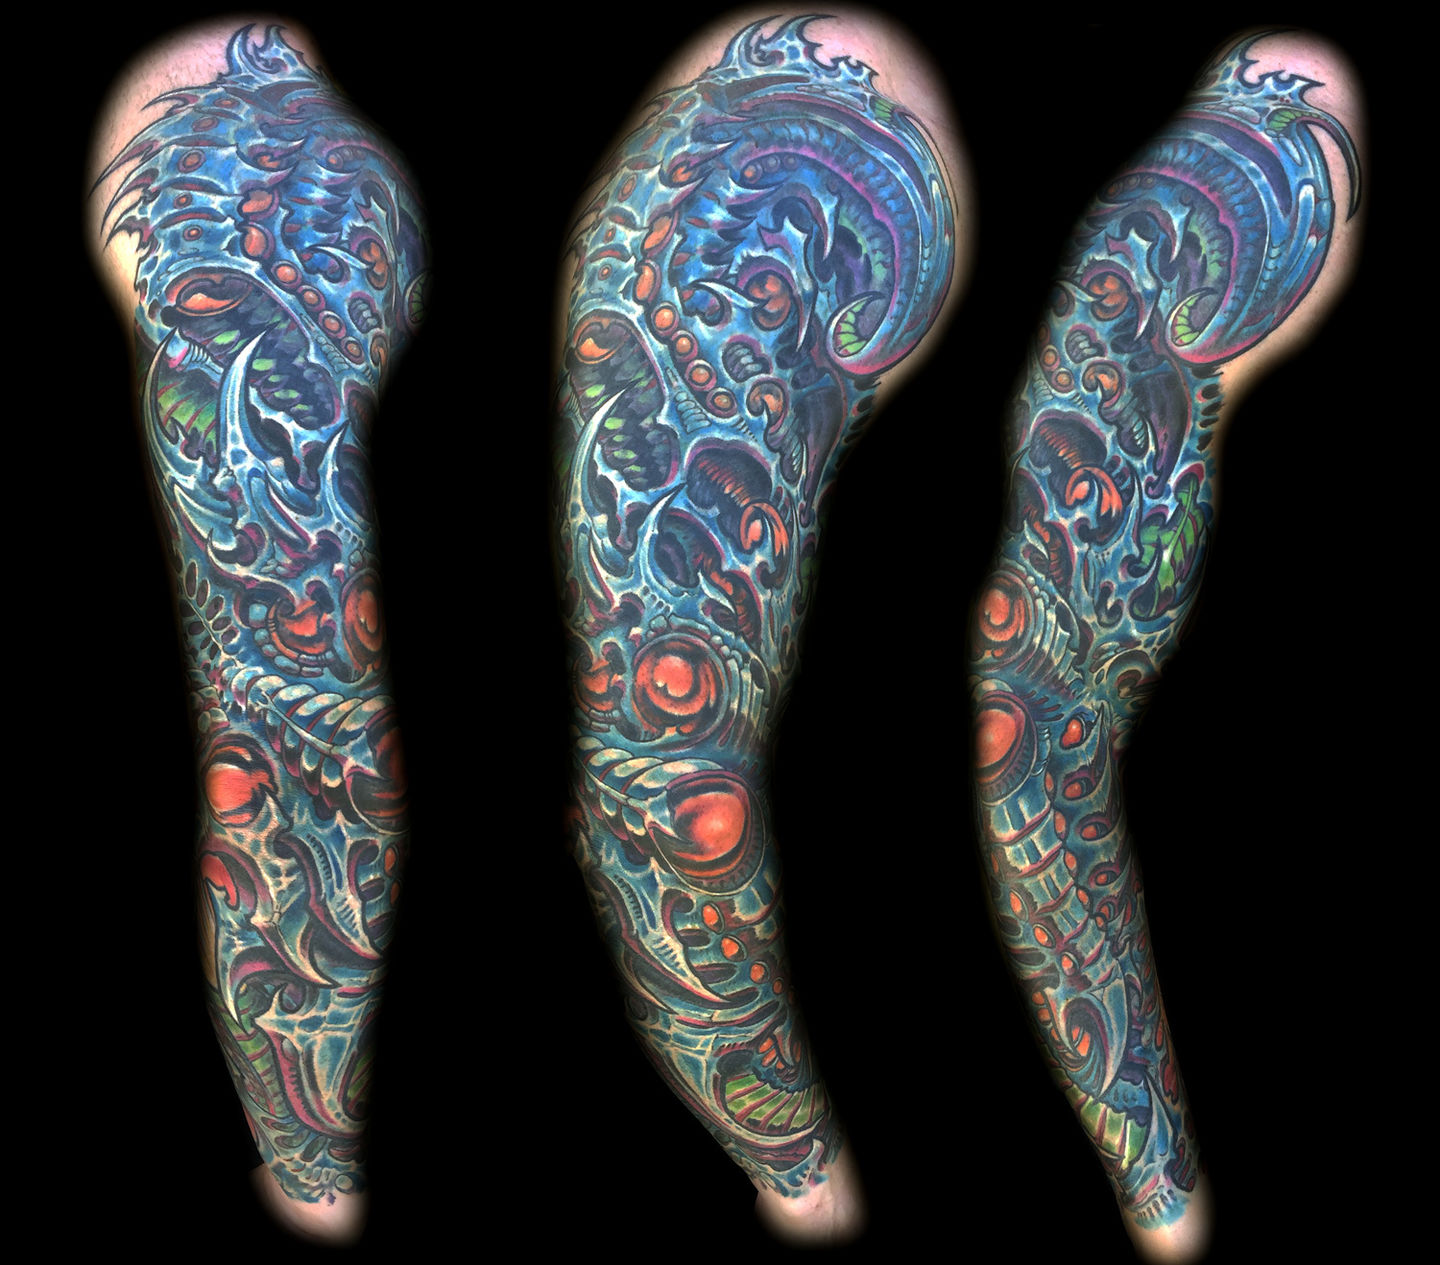 Best-las-vegas-tattoo-artists-shops-joe-riley-inner-visions-tattoo-biomech-biomechanical-sleeve-tattoo